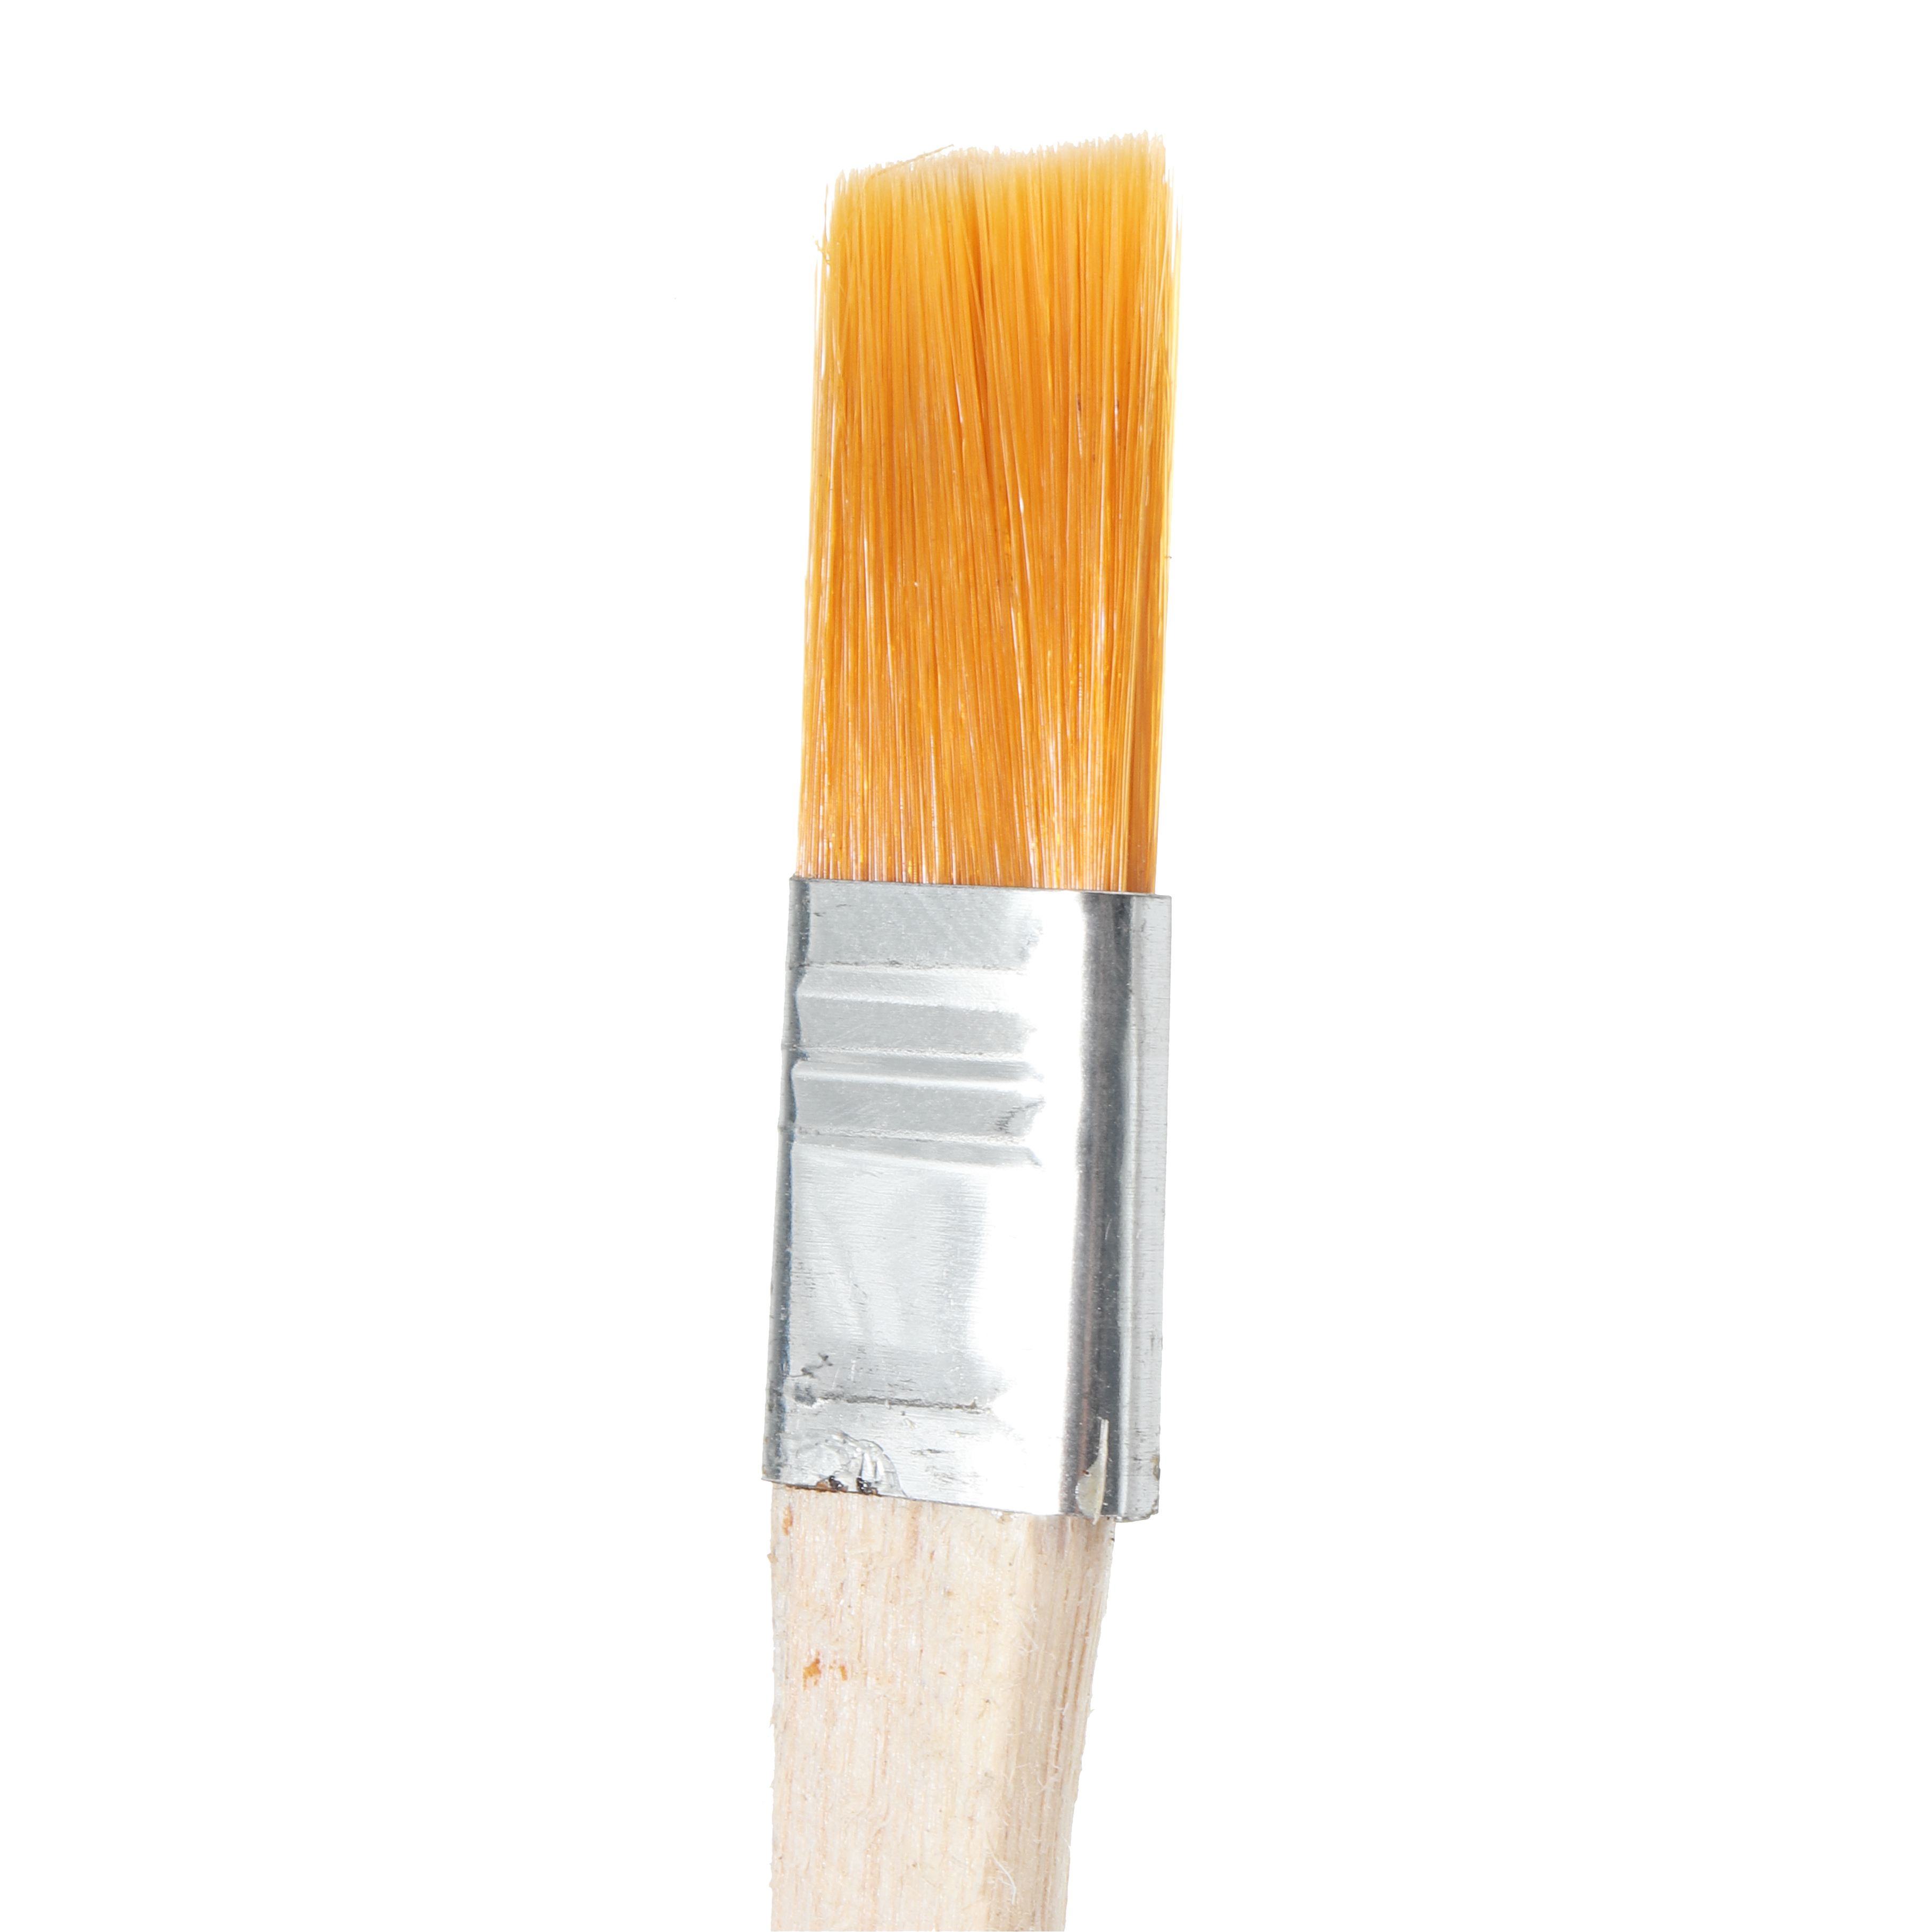 Nylon-Cleaning-Brush-DIY-Handmade-Sand-Table-Construction-Model-tool-Brushes-1491171-9